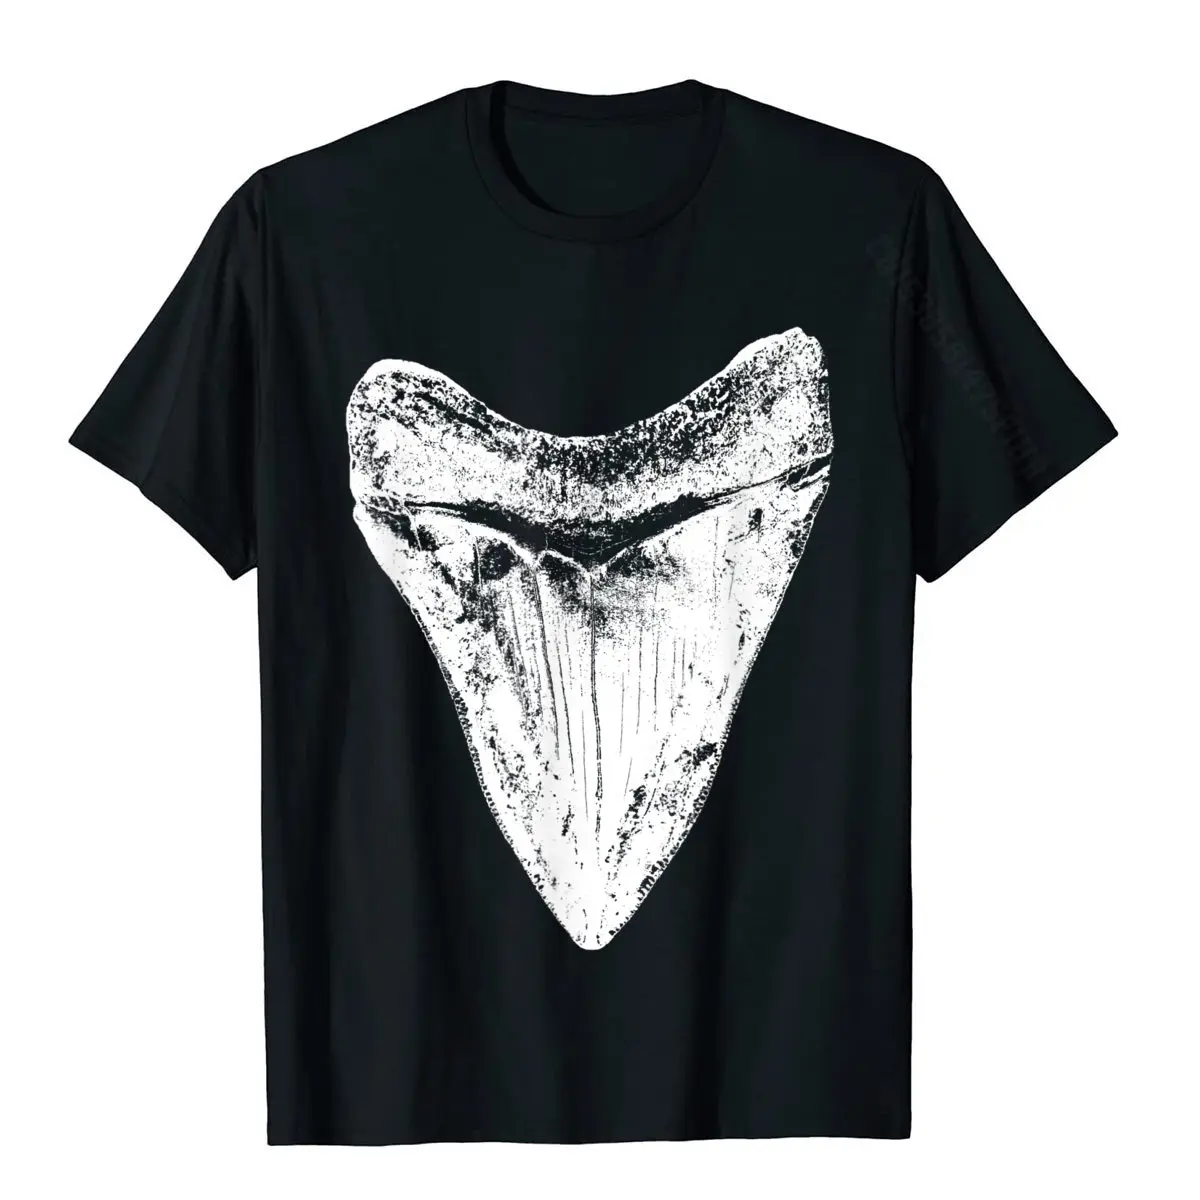 Megalodon Shark Tooth T-Shirt | Meg Sharks Teeth Gift TShirt T Shirt Casual Classic Cotton Tops & Tees Europe For Men